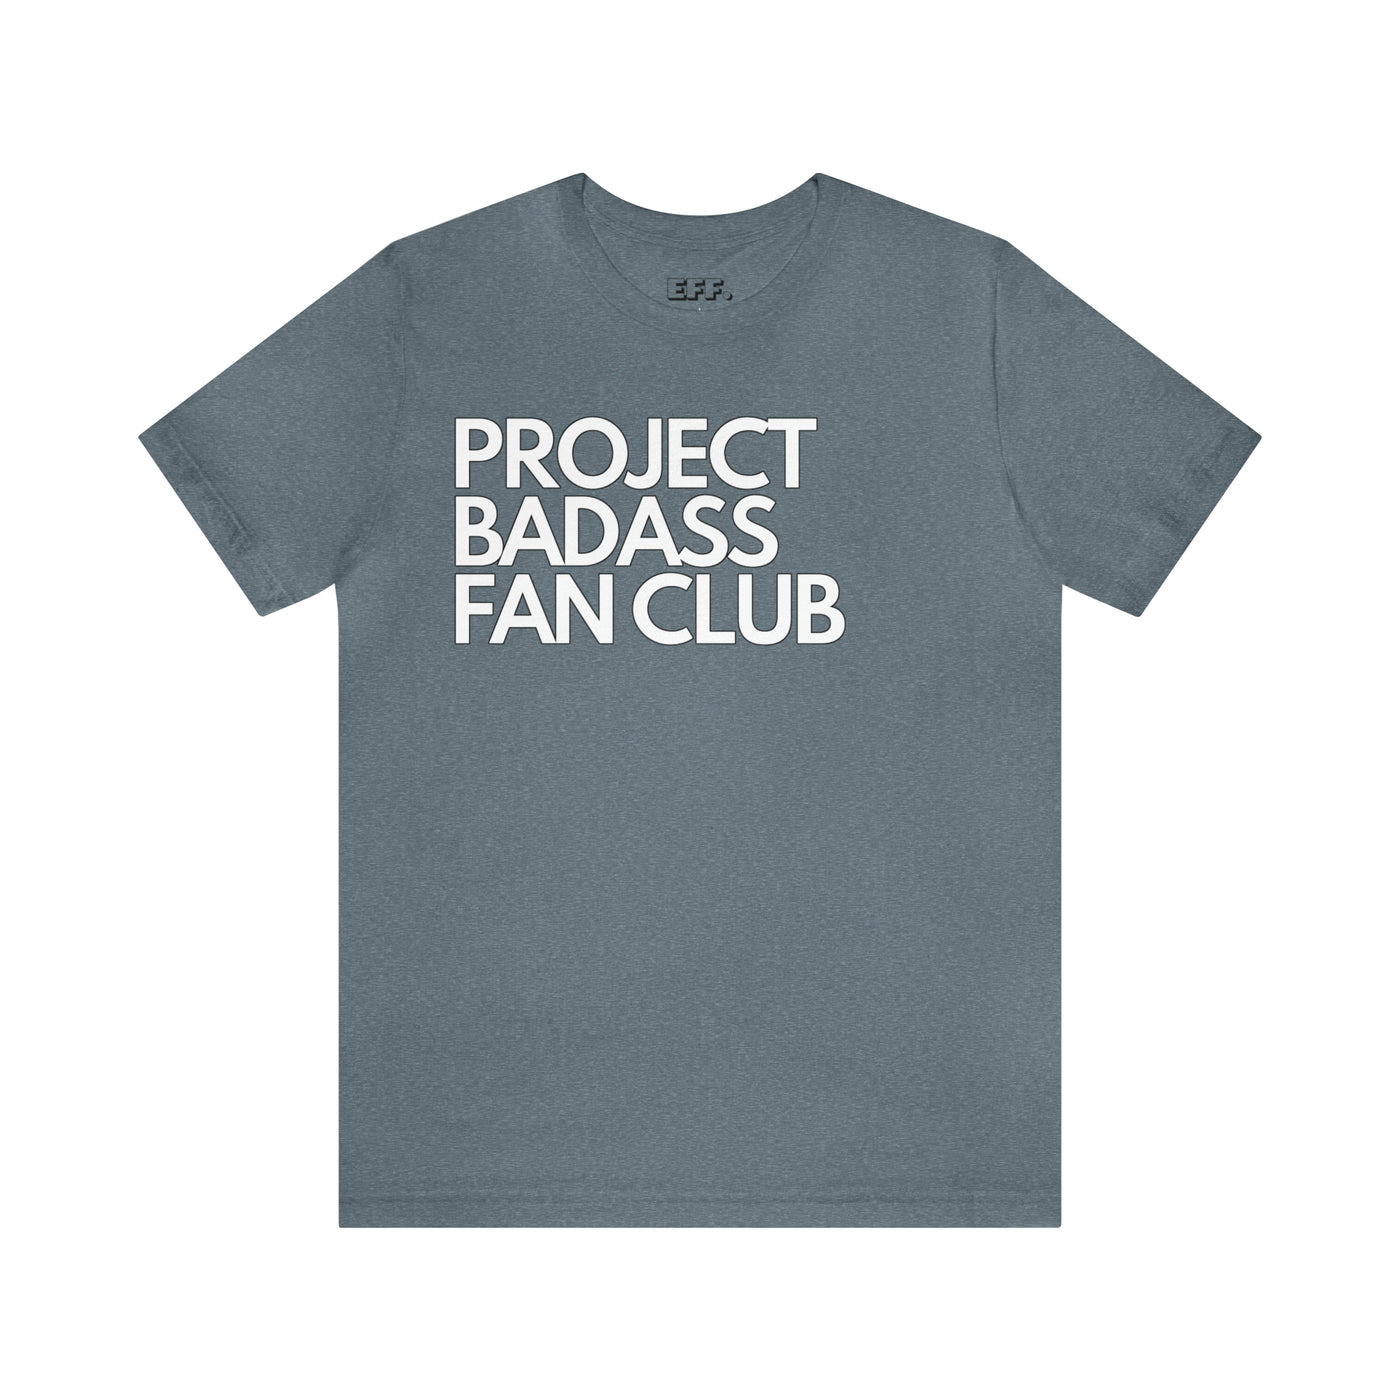 Project Badass Fanclub